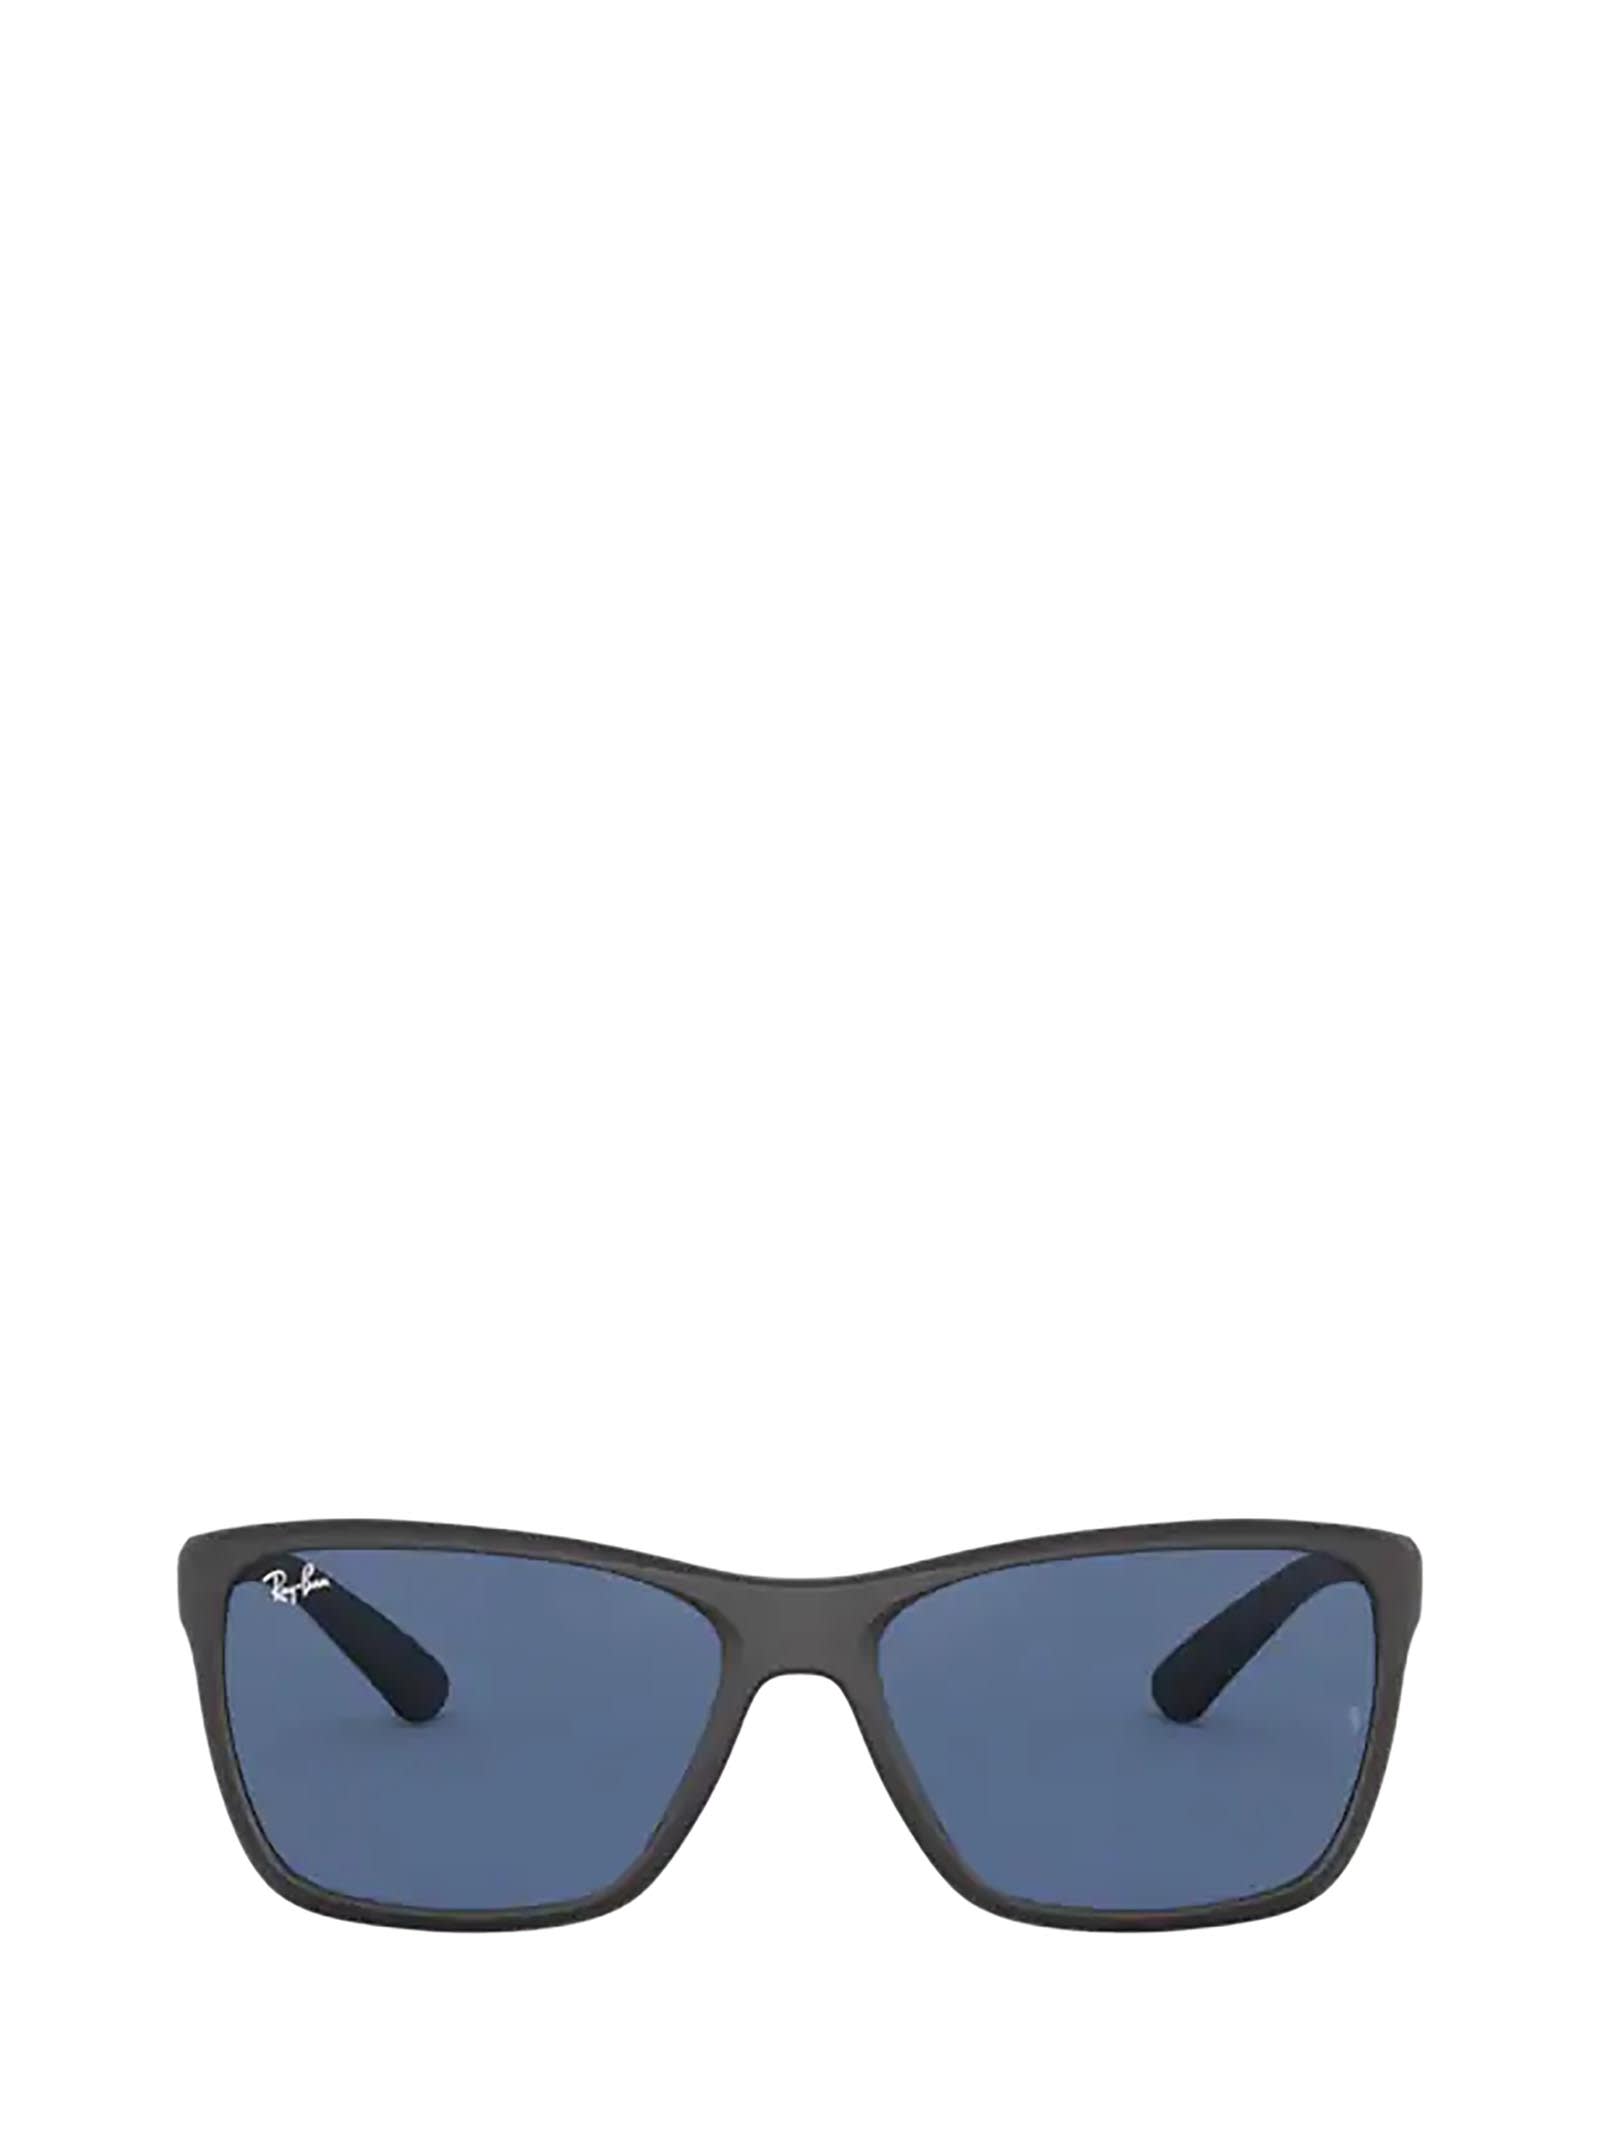 Ray-Ban Ray-ban Rb4331 Matte Black Sunglasses